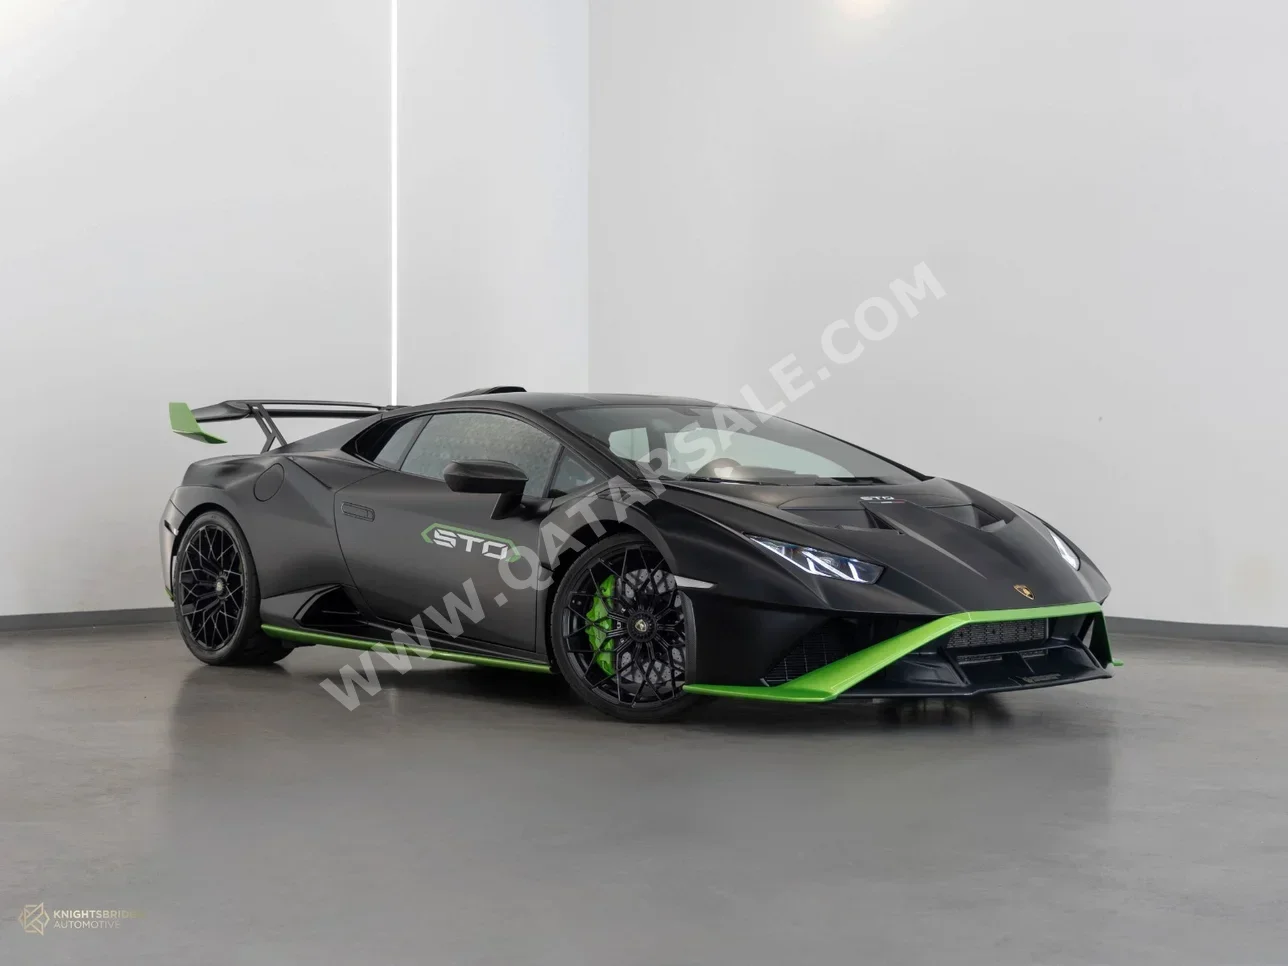 Lamborghini  Huracan  STO  2022  F-1  21,800 Km  10 Cylinder  Rear Wheel Drive (RWD)  Coupe / Sport  Black  With Warranty